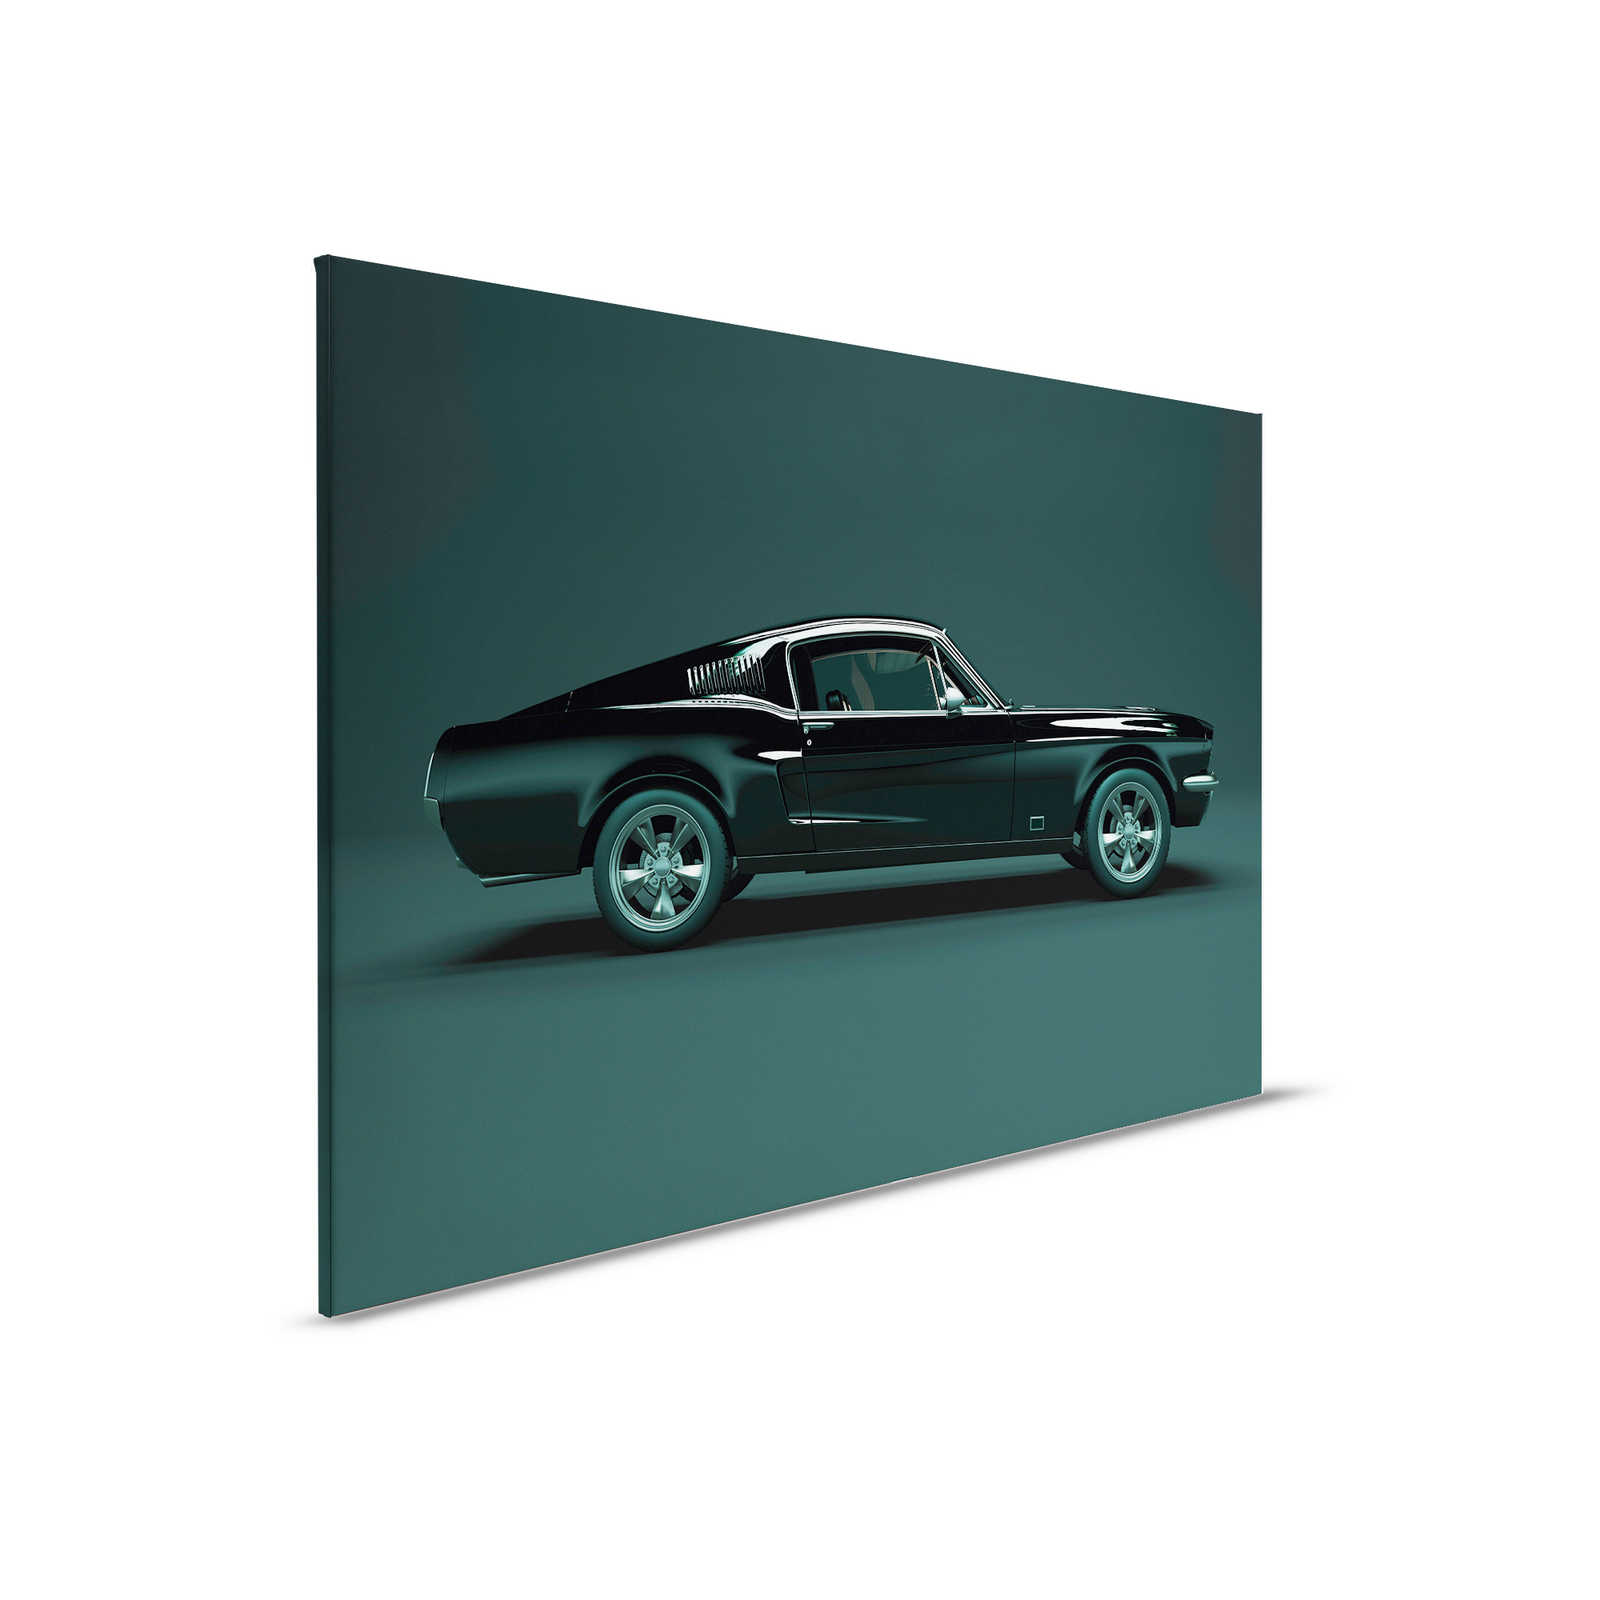             Mustang 1 - Leinwandbild, Seitenansicht Mustang, Vintage – 0,90 m x 0,60 m
        